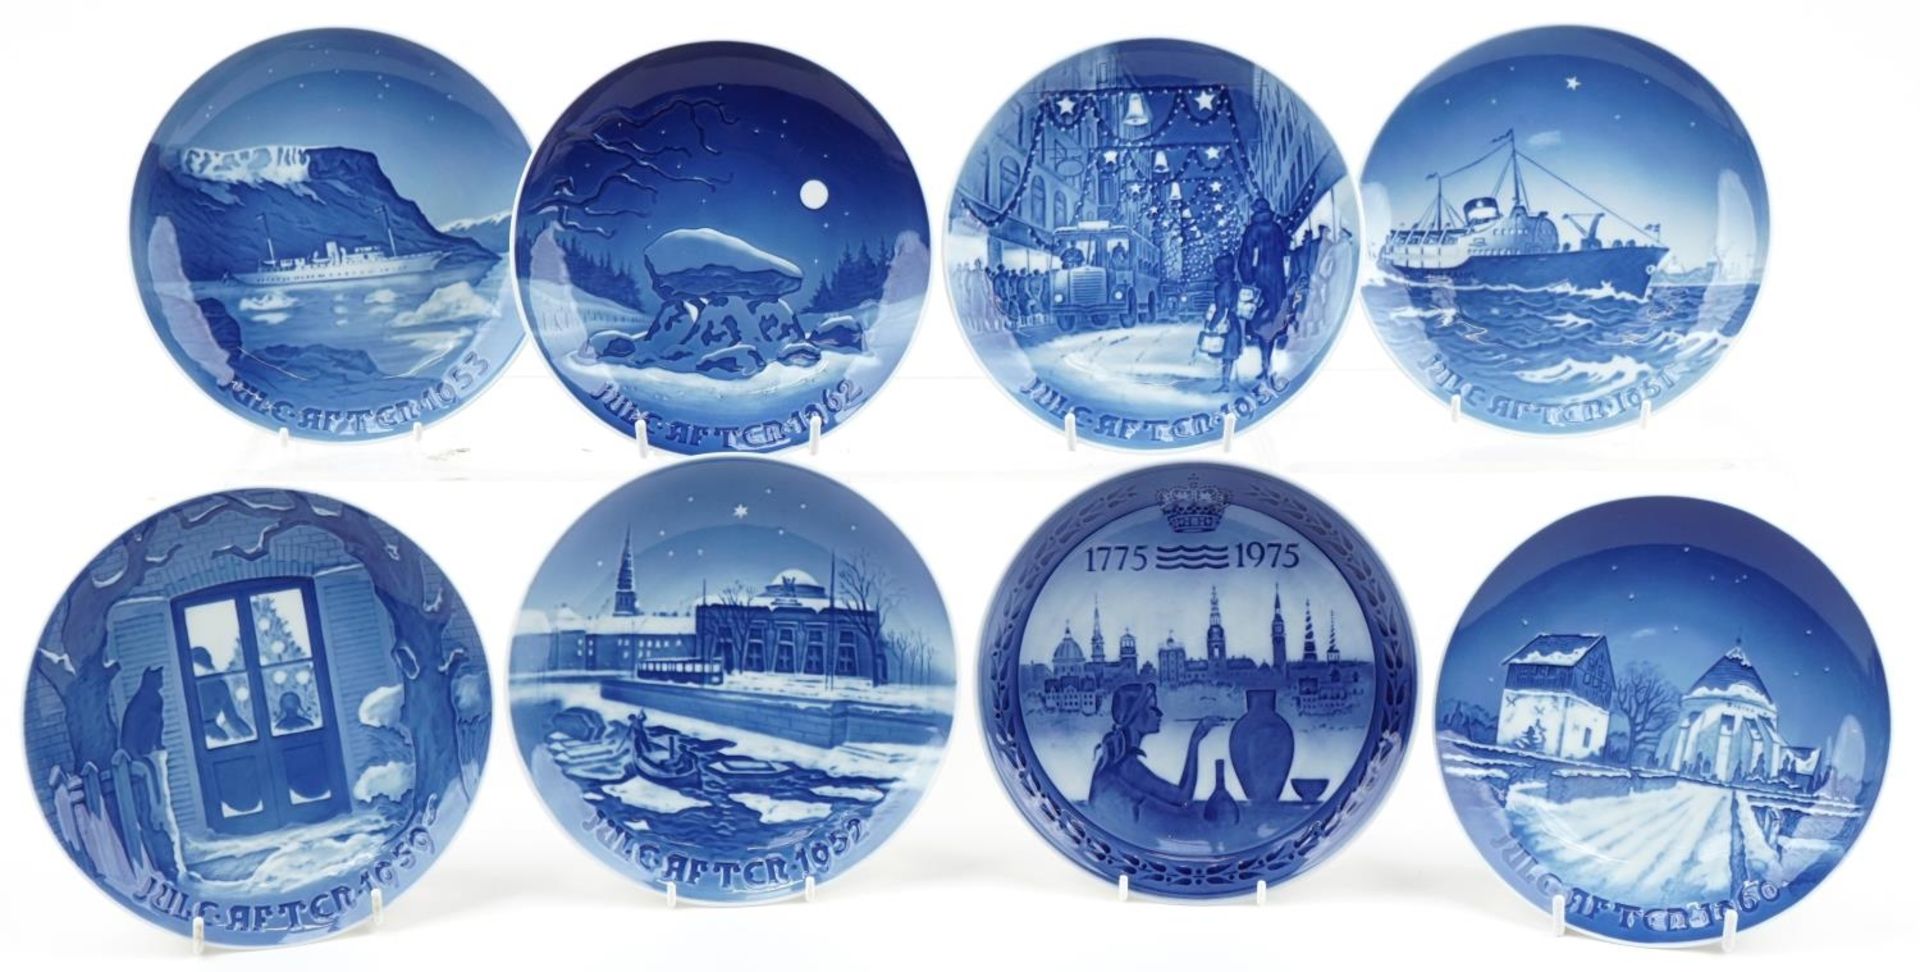 Bing & Grondahl and Royal Copenhagen, eight Danish porcelain 1950s and 60s Christmas plates